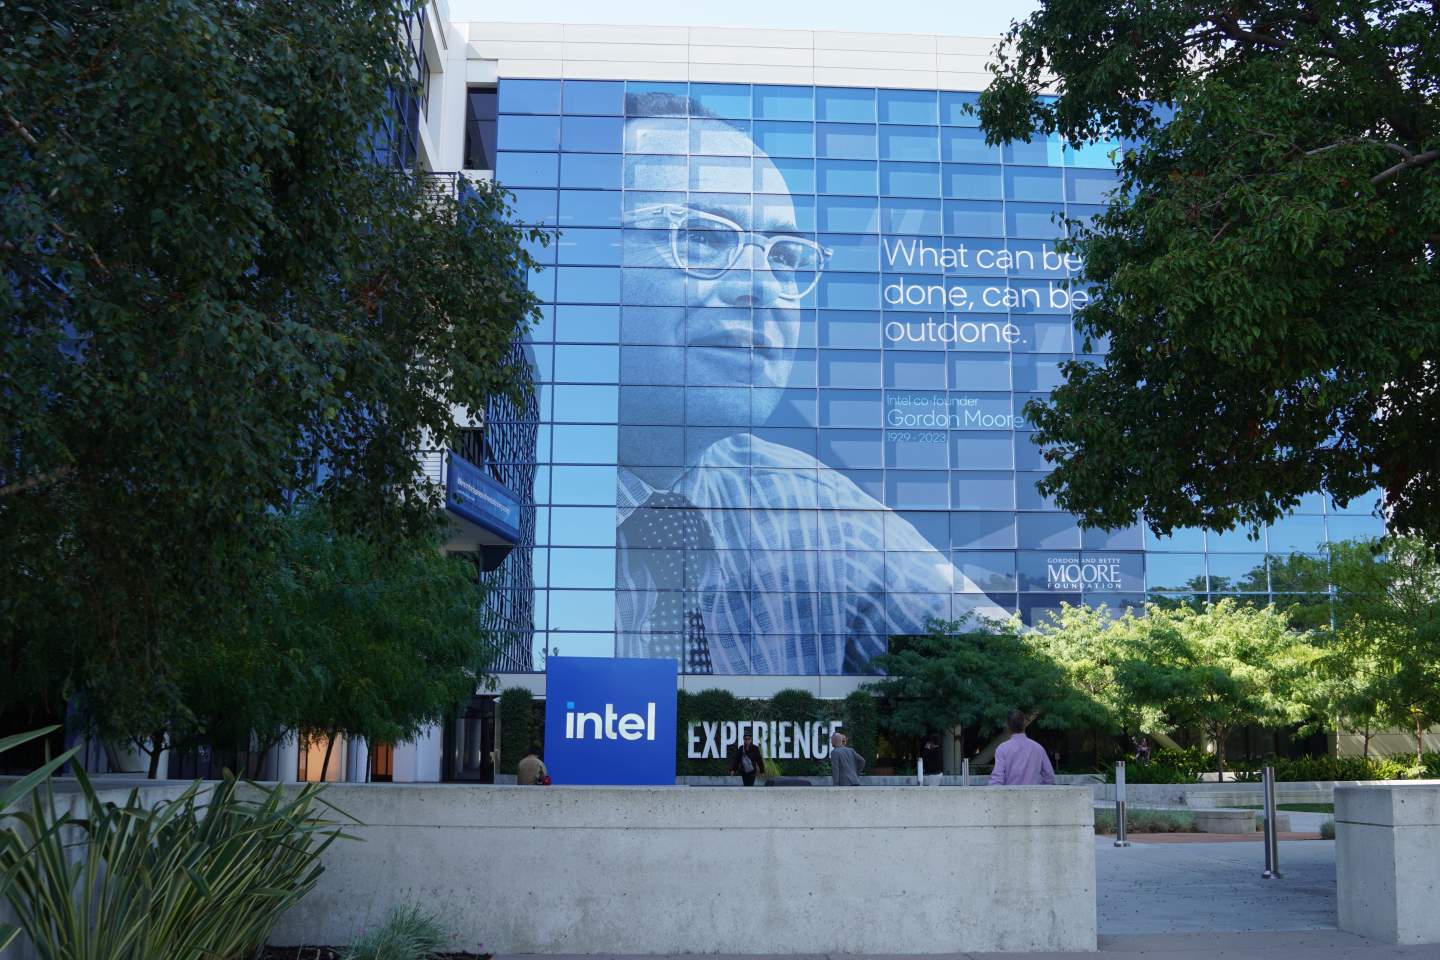 Intel總部為了紀念今（2023）年世的高登‧摩爾，在總部外牆掛上了他的格言，「What can be done, can be outdone.」（任何能被完成的事，都能被超越），相當能展現Intel一直不斷追求創新的精神。